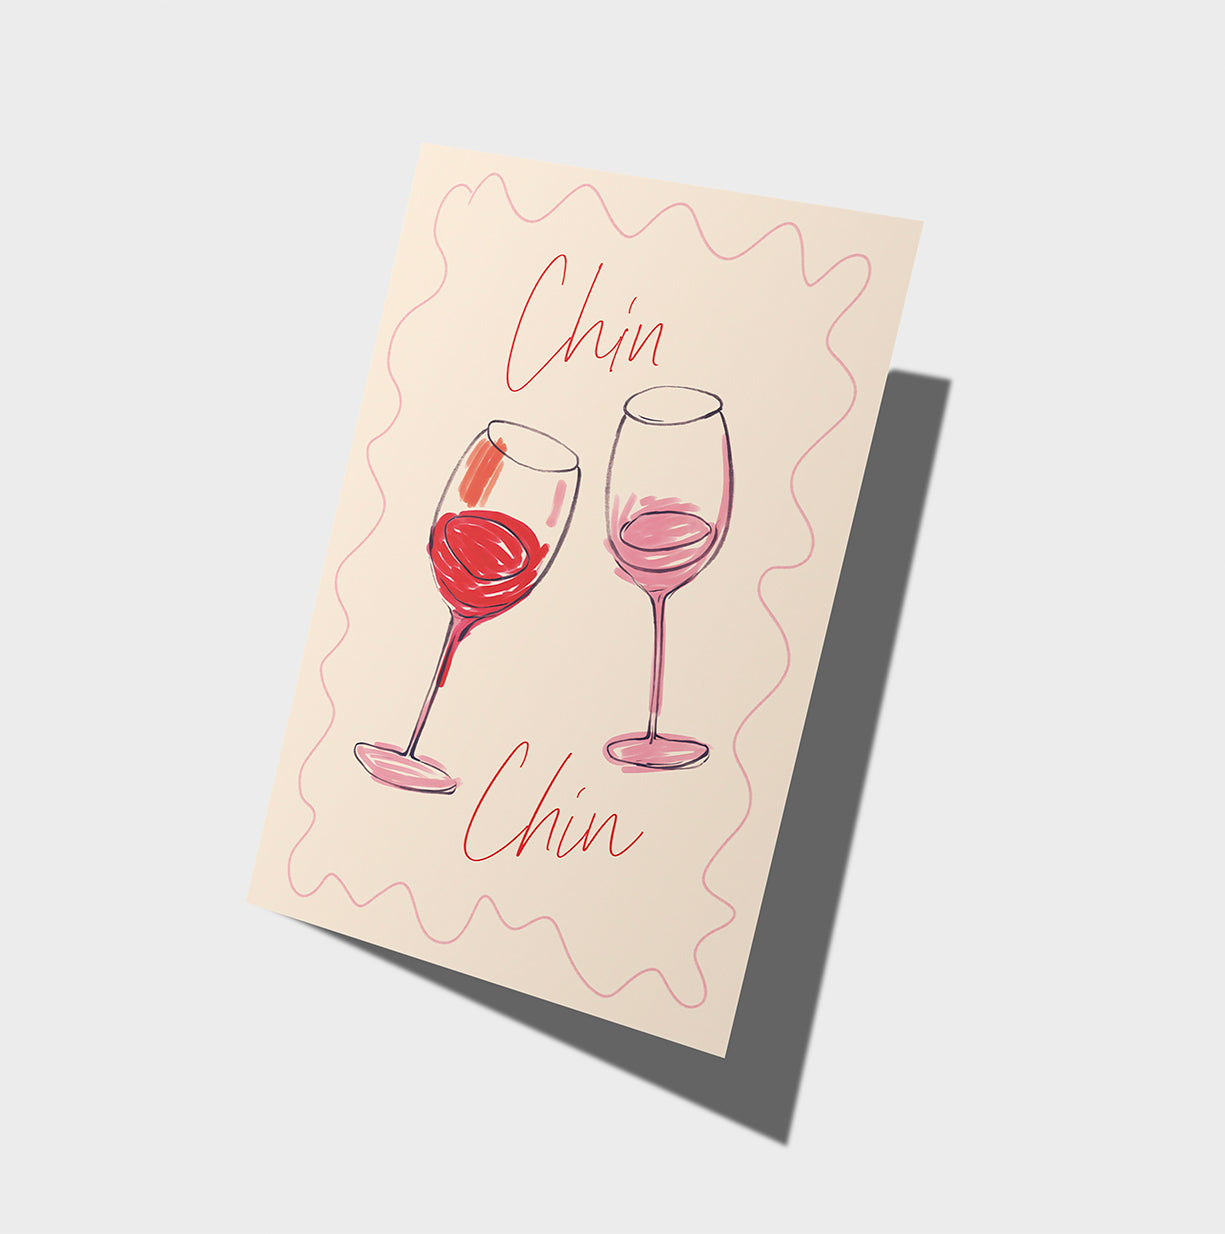 Chin Chin Card | Hand Drawn Illustration | Celebration Card | Wine Glass Cheers